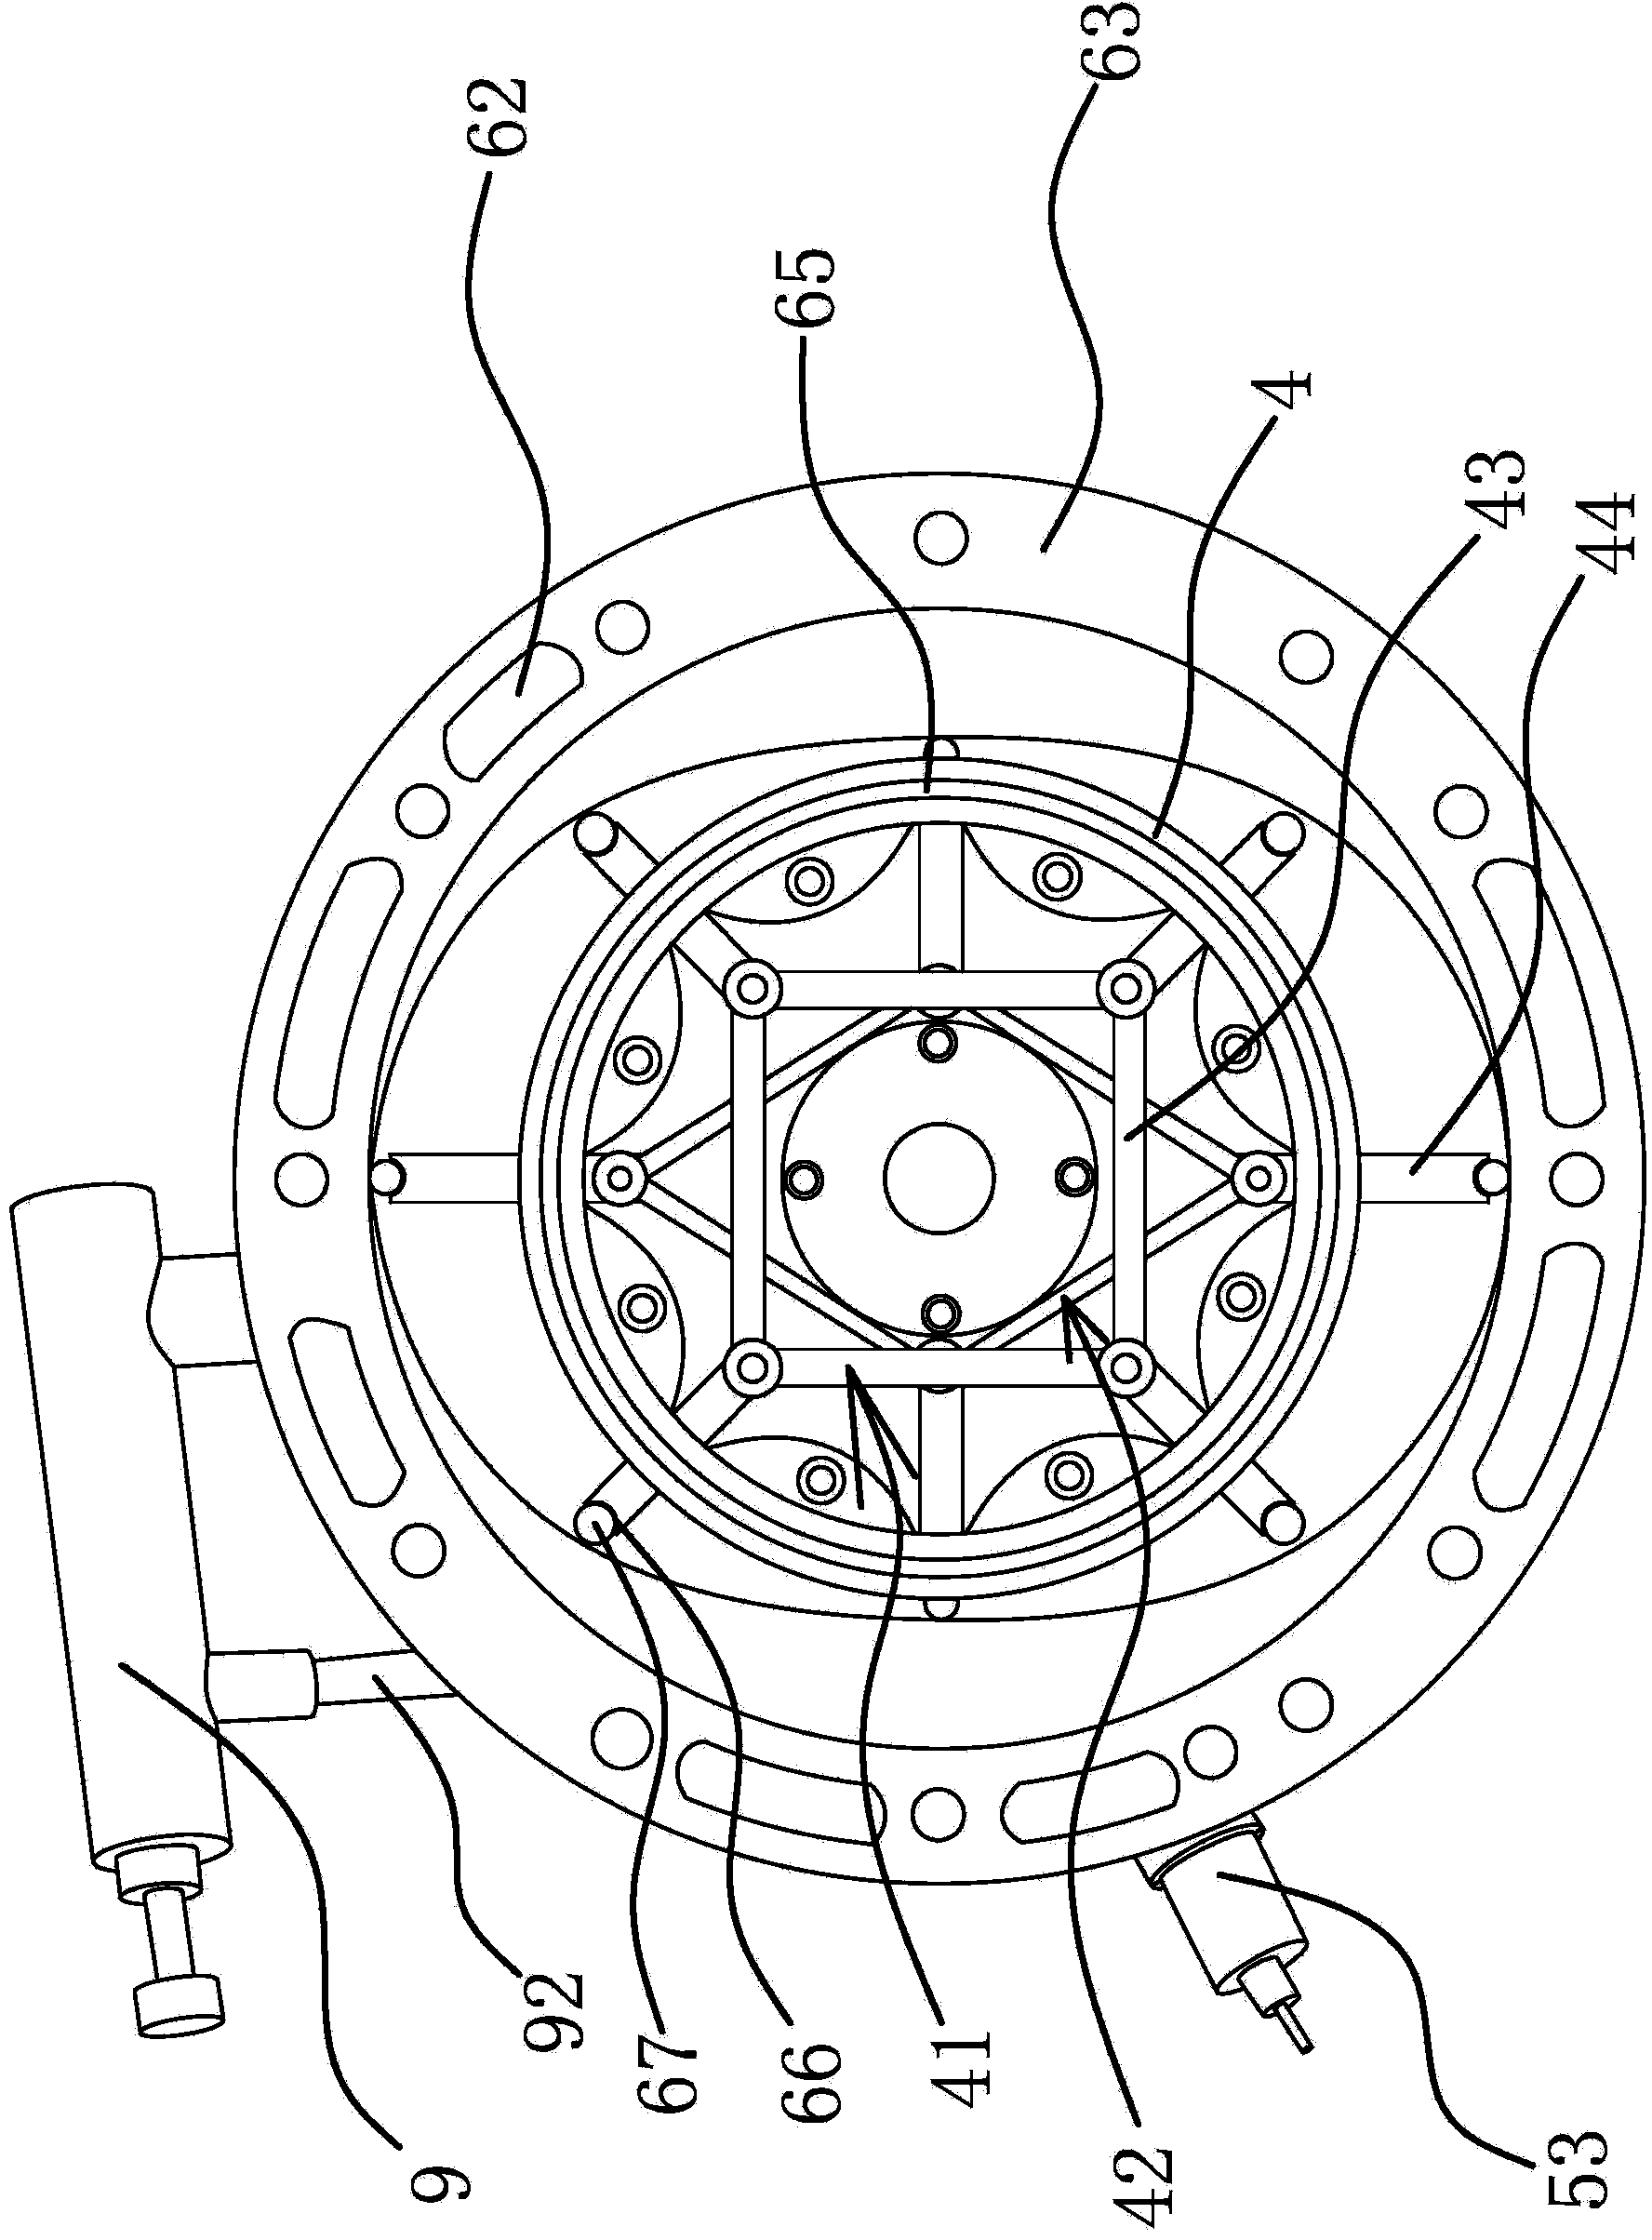 Dual-prism rotor engine